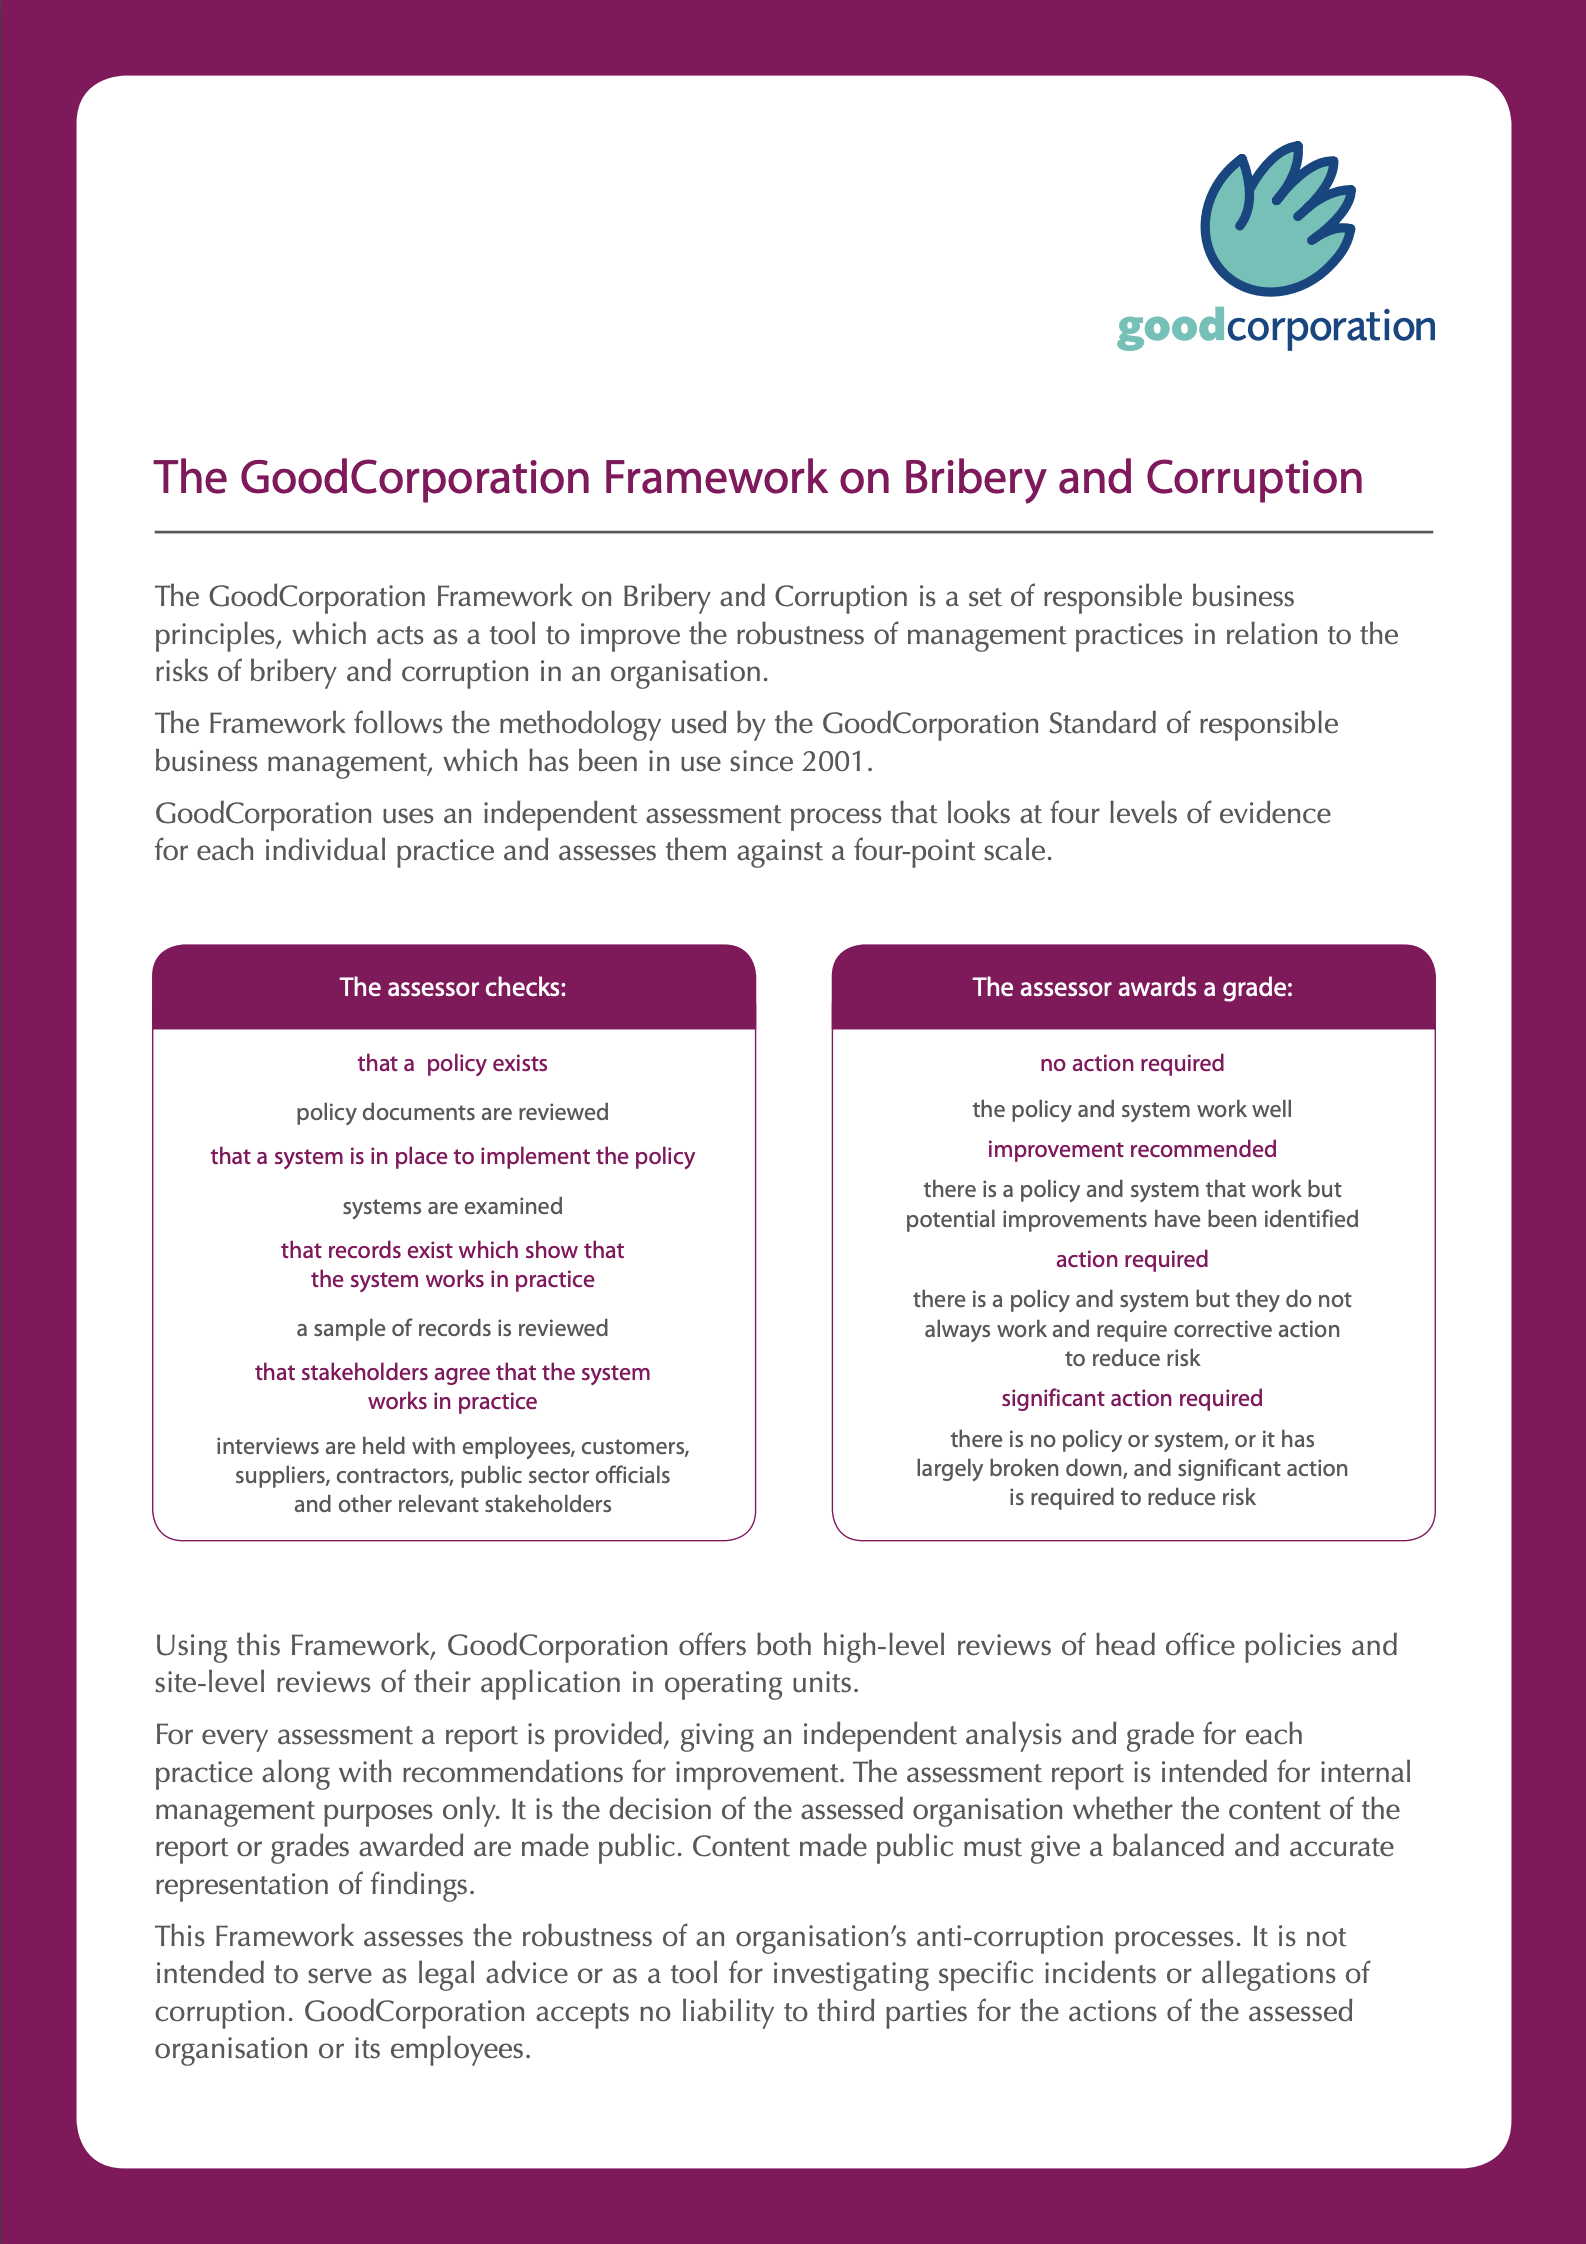 The GoodCorporation framework on anti-bribery and corruption